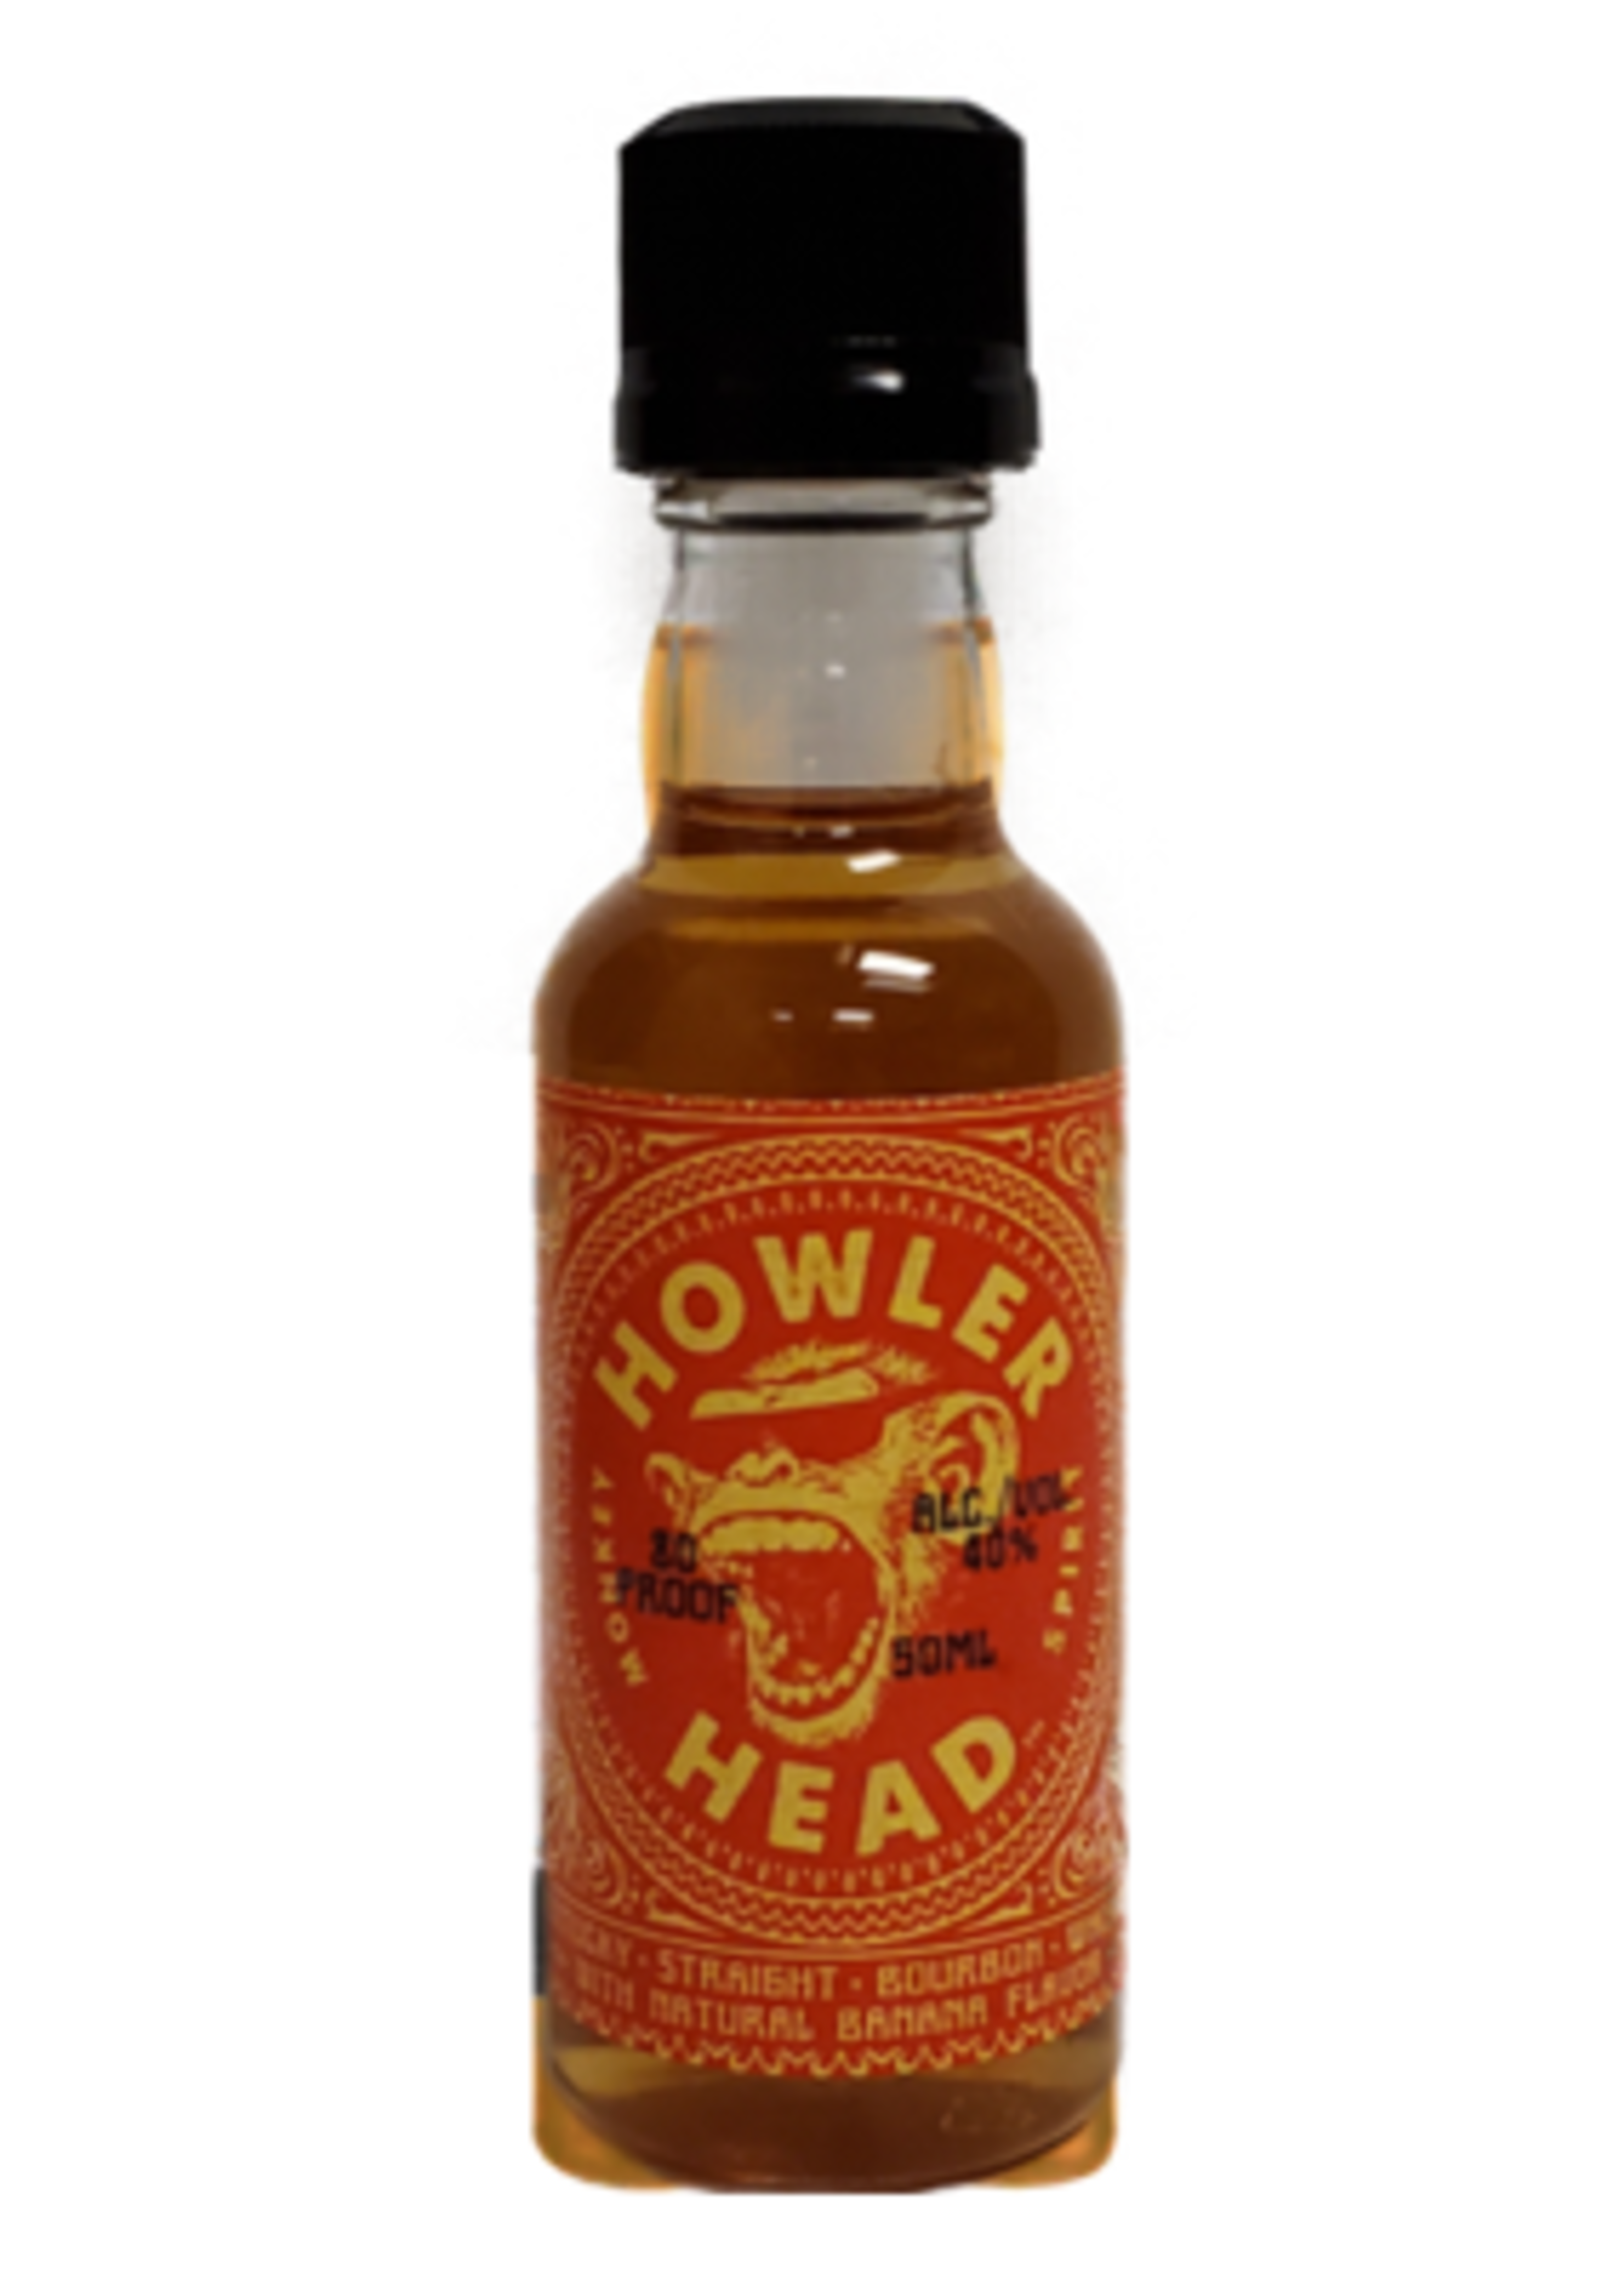 Howler Head Howler Head / Monkey Spirit Kentucky Straight Bourbon Whiskey with Natural Banana Flavor / 50mL